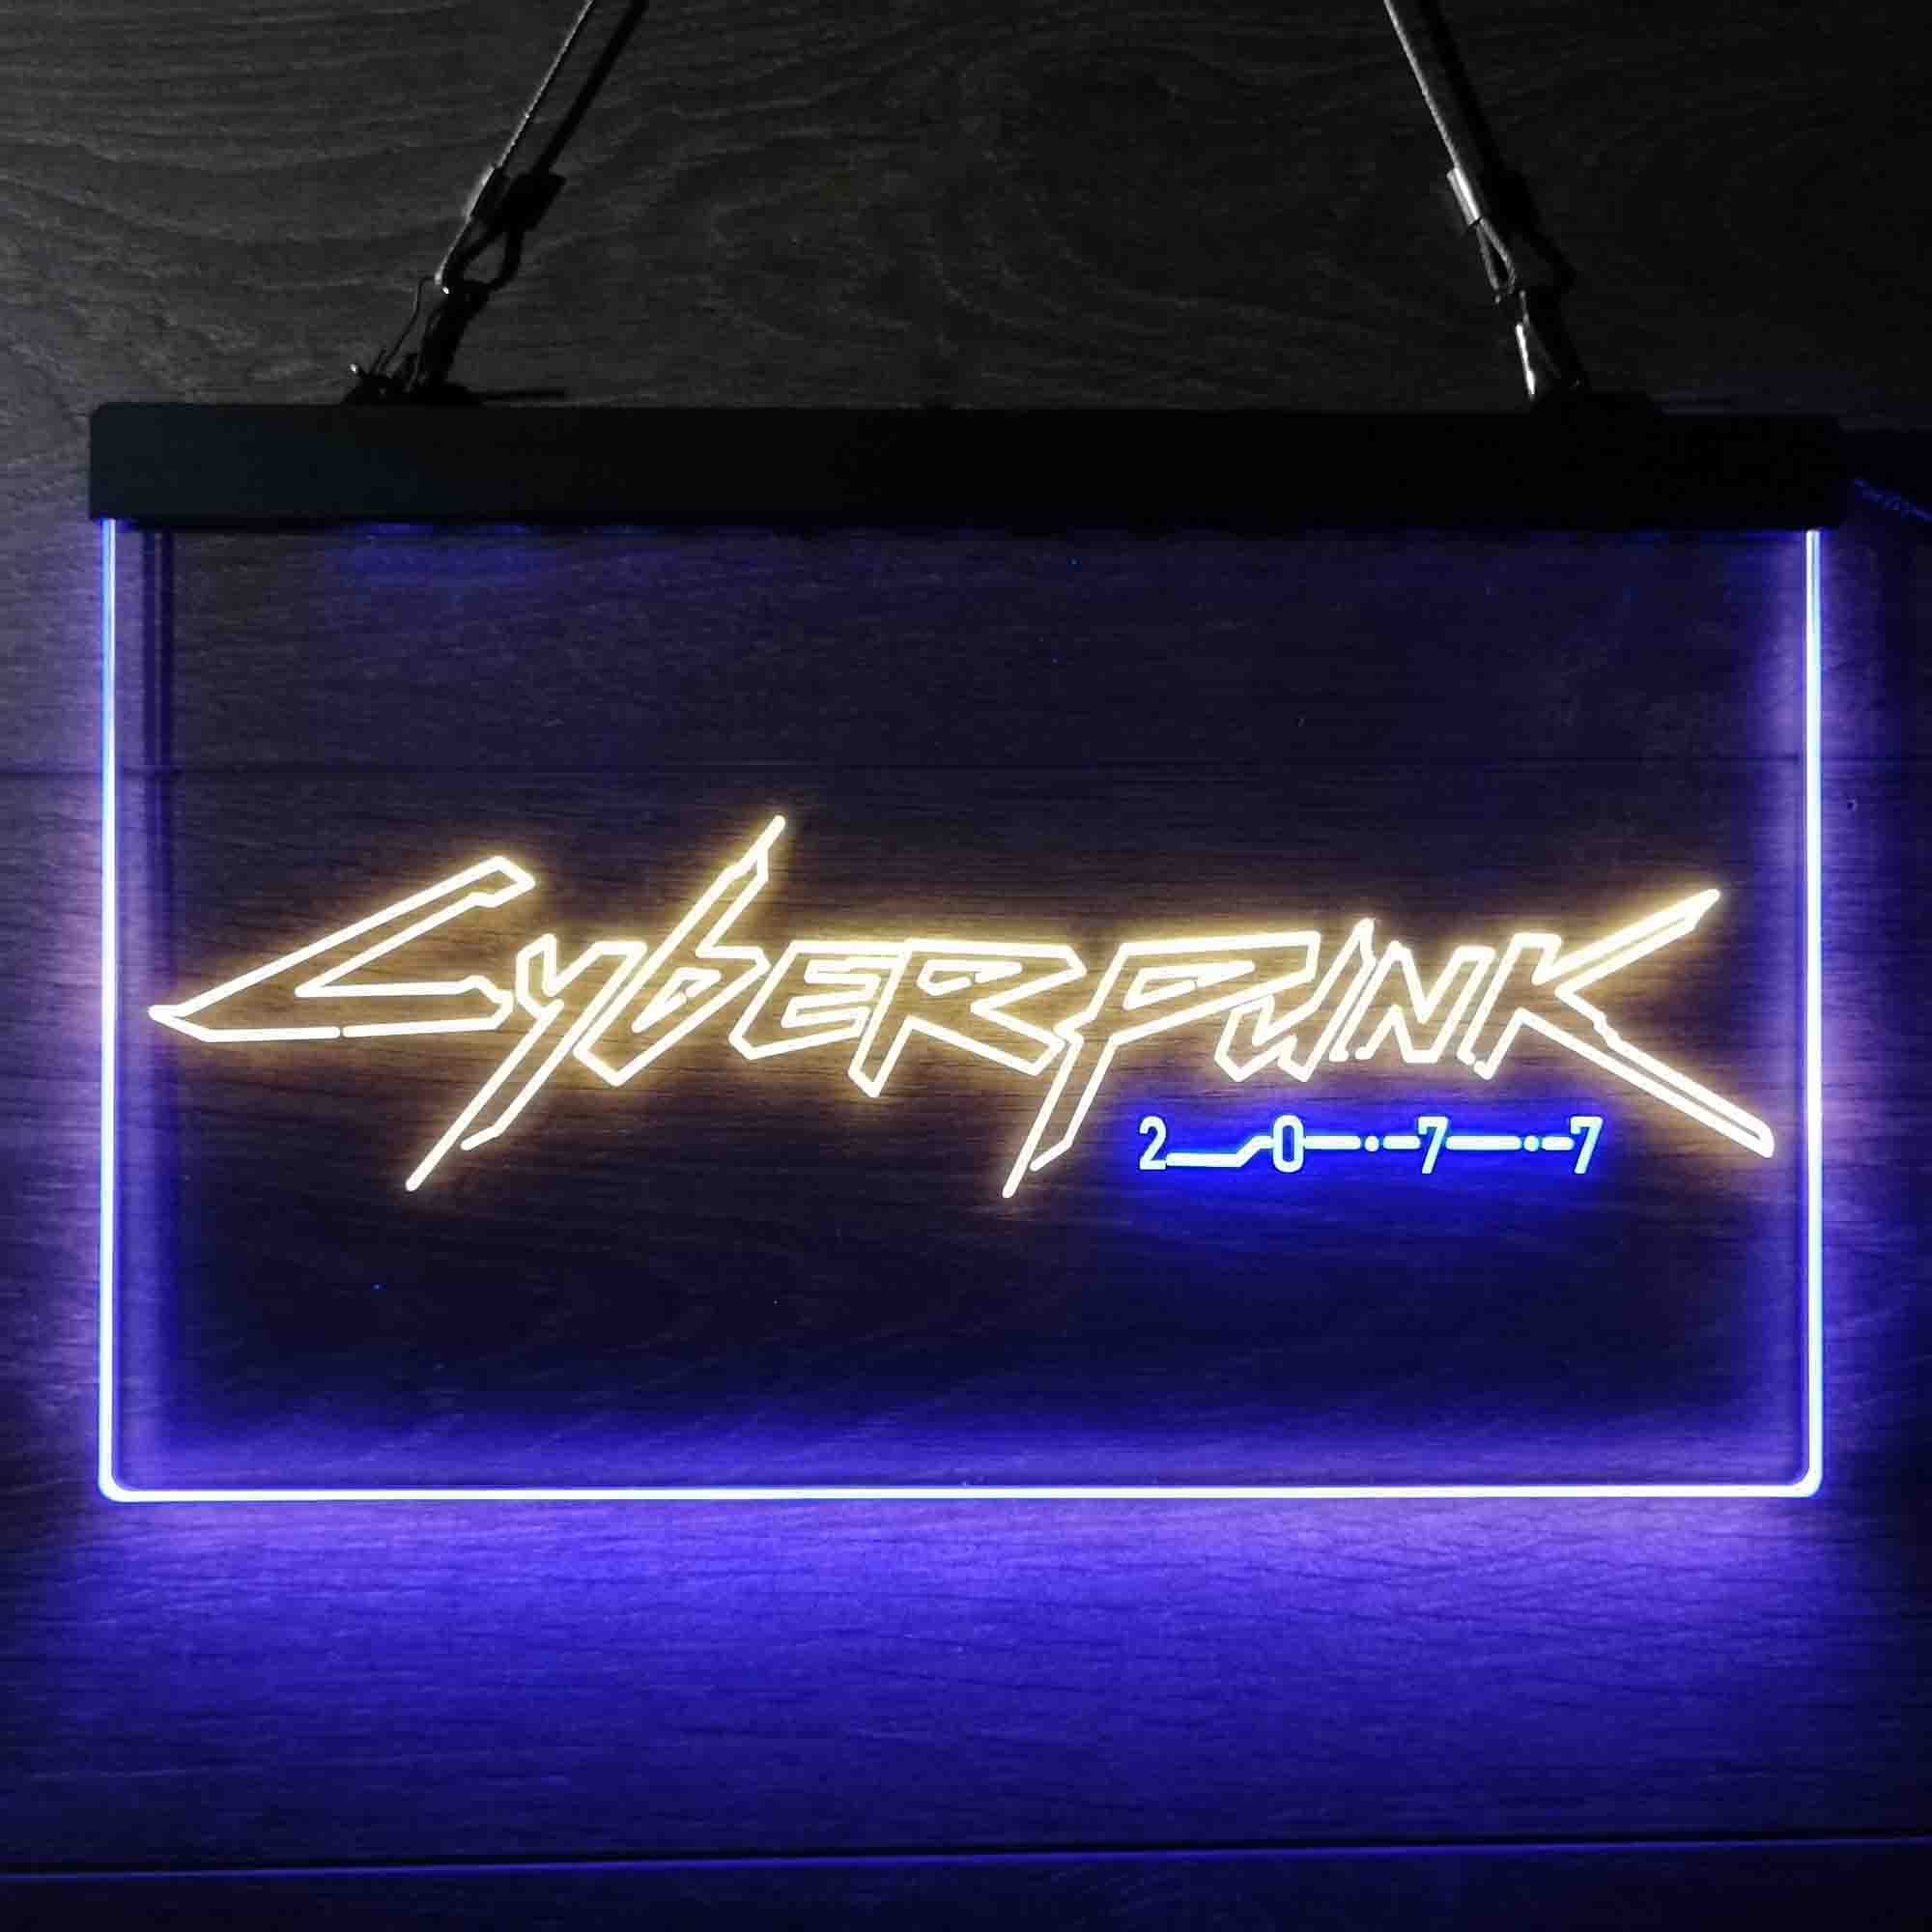 Cyberpunk 2077 Game Room Neon Light LED Sign